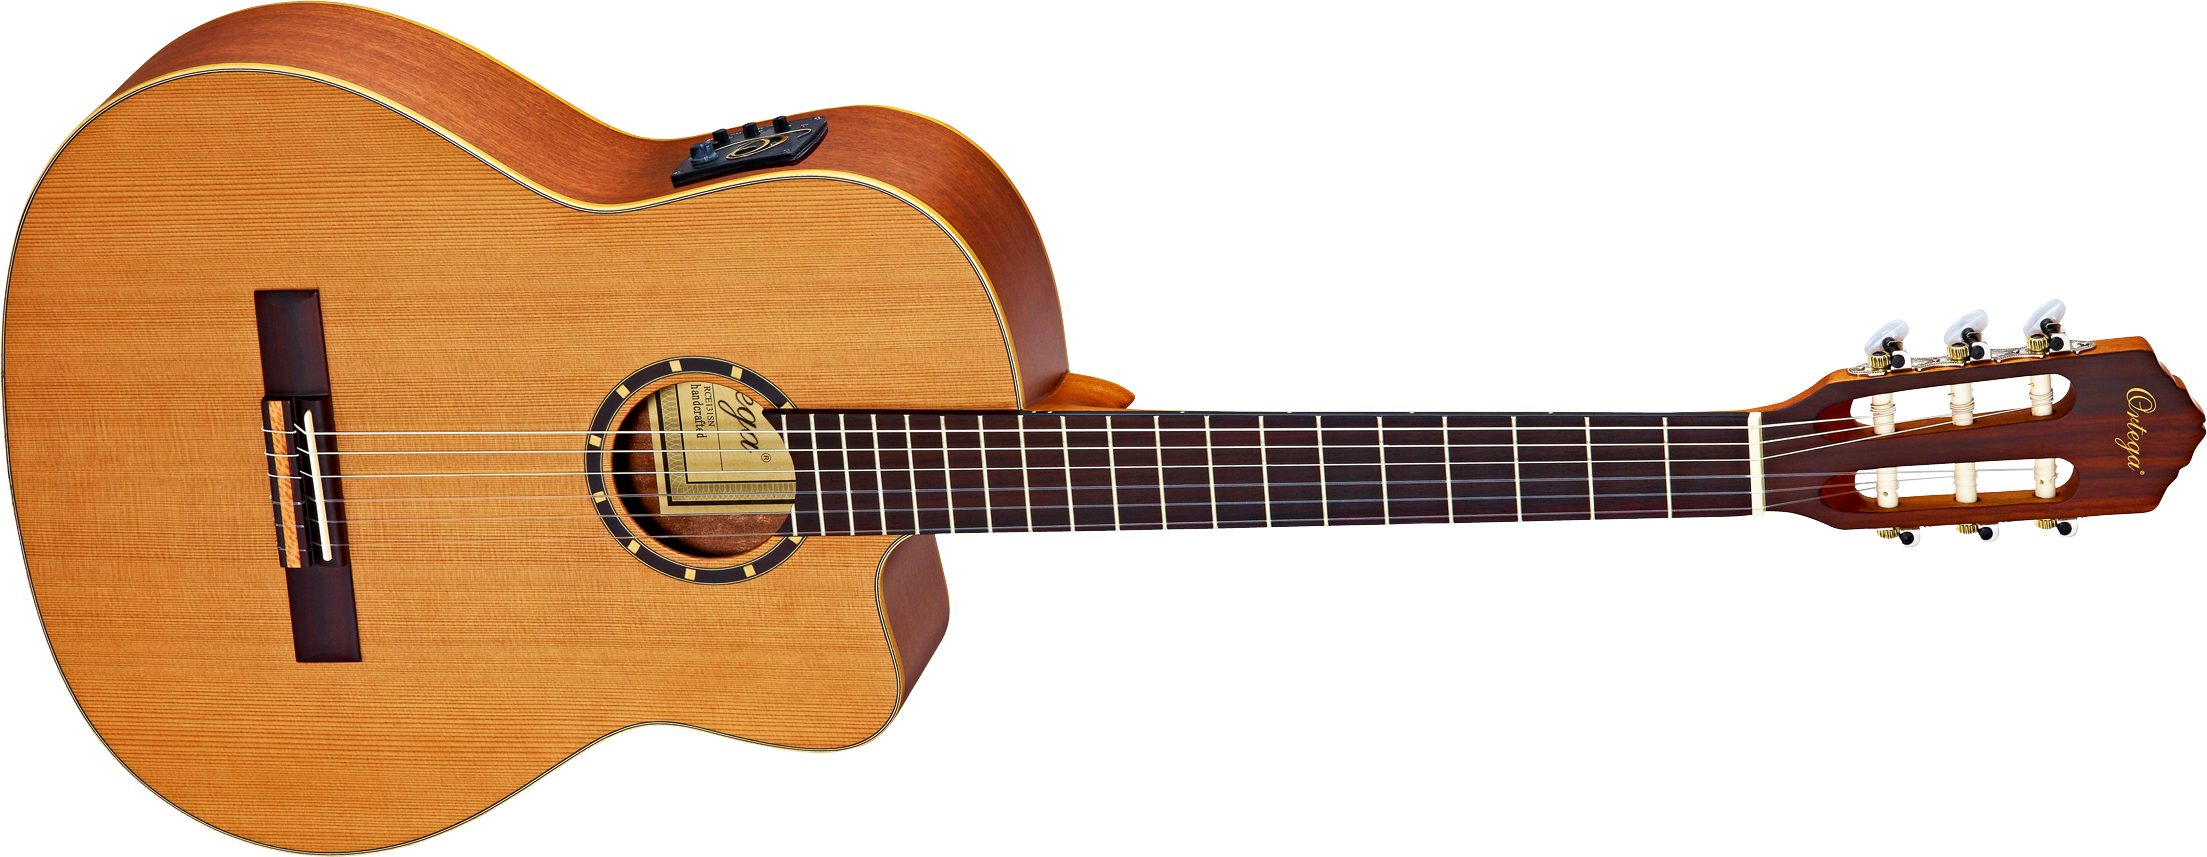 Cort Bass Classical Guitar Guitars Acoustic Clipart